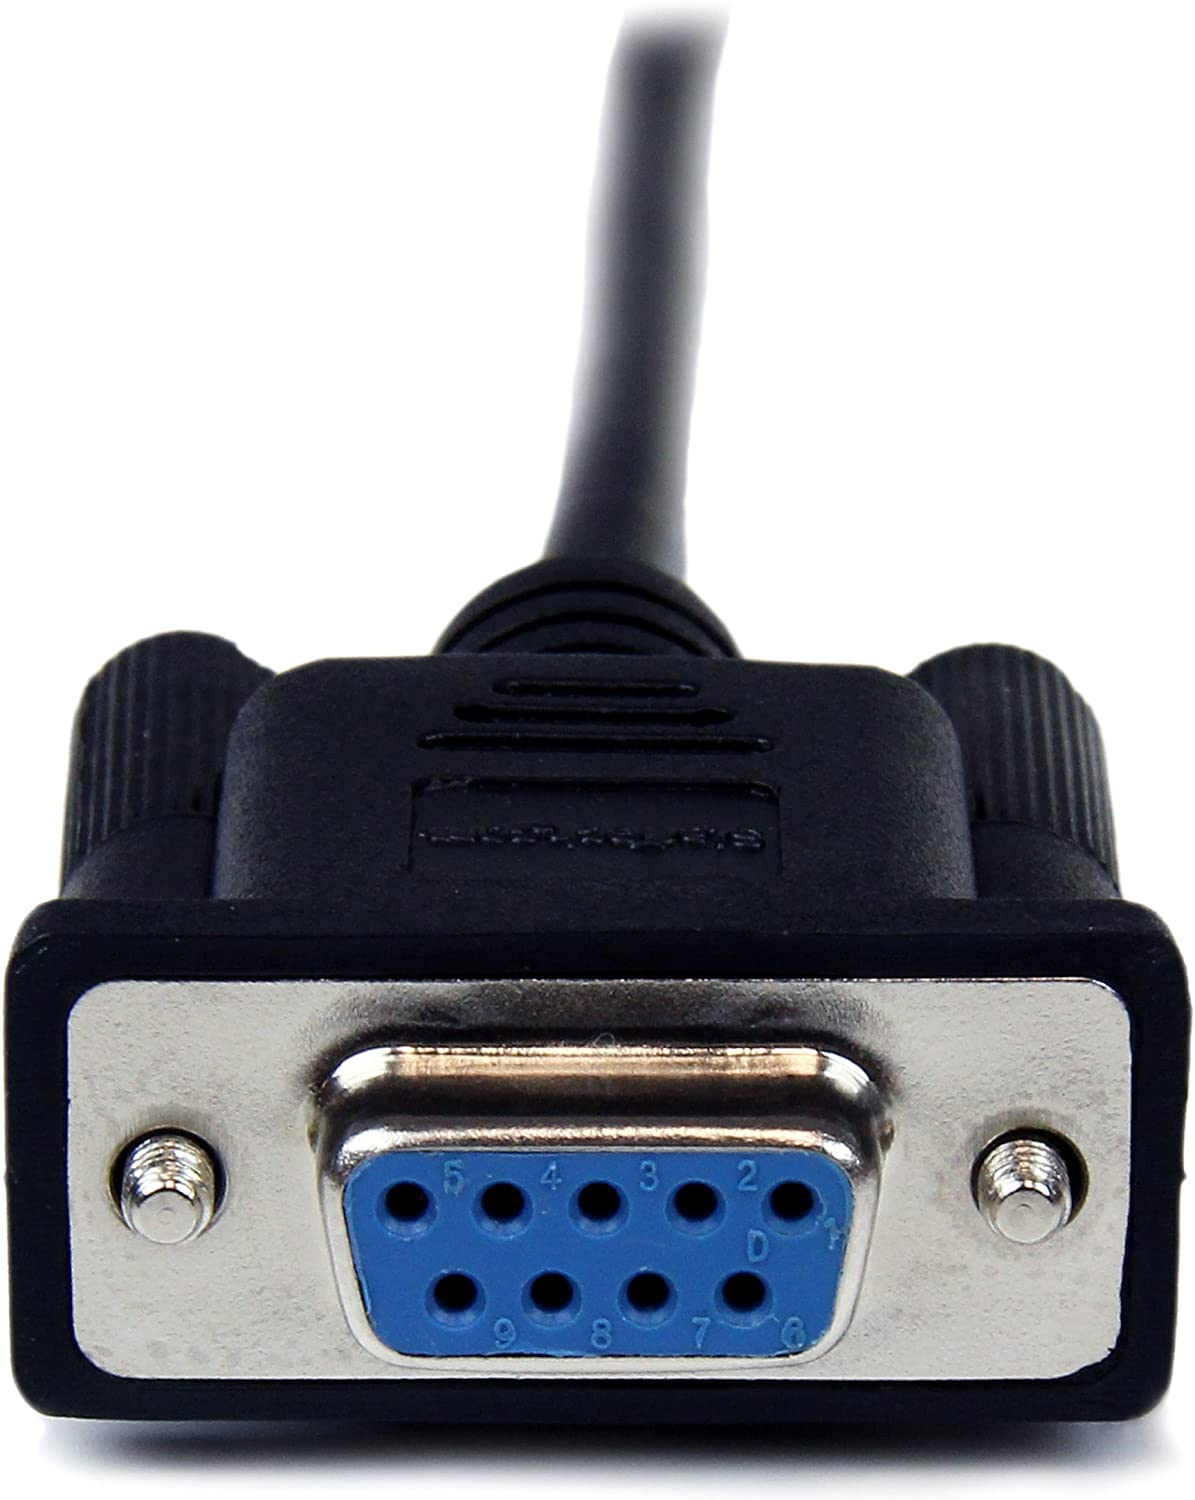 StarTech.com 2m Black DB9 RS232 Serial Null Modem Cable F/M - DB9 Male to Female - 9 pin Null Modem Cable - 1x DB9 (M), 1x DB9 (F), Black, SCNM9FM2MBK